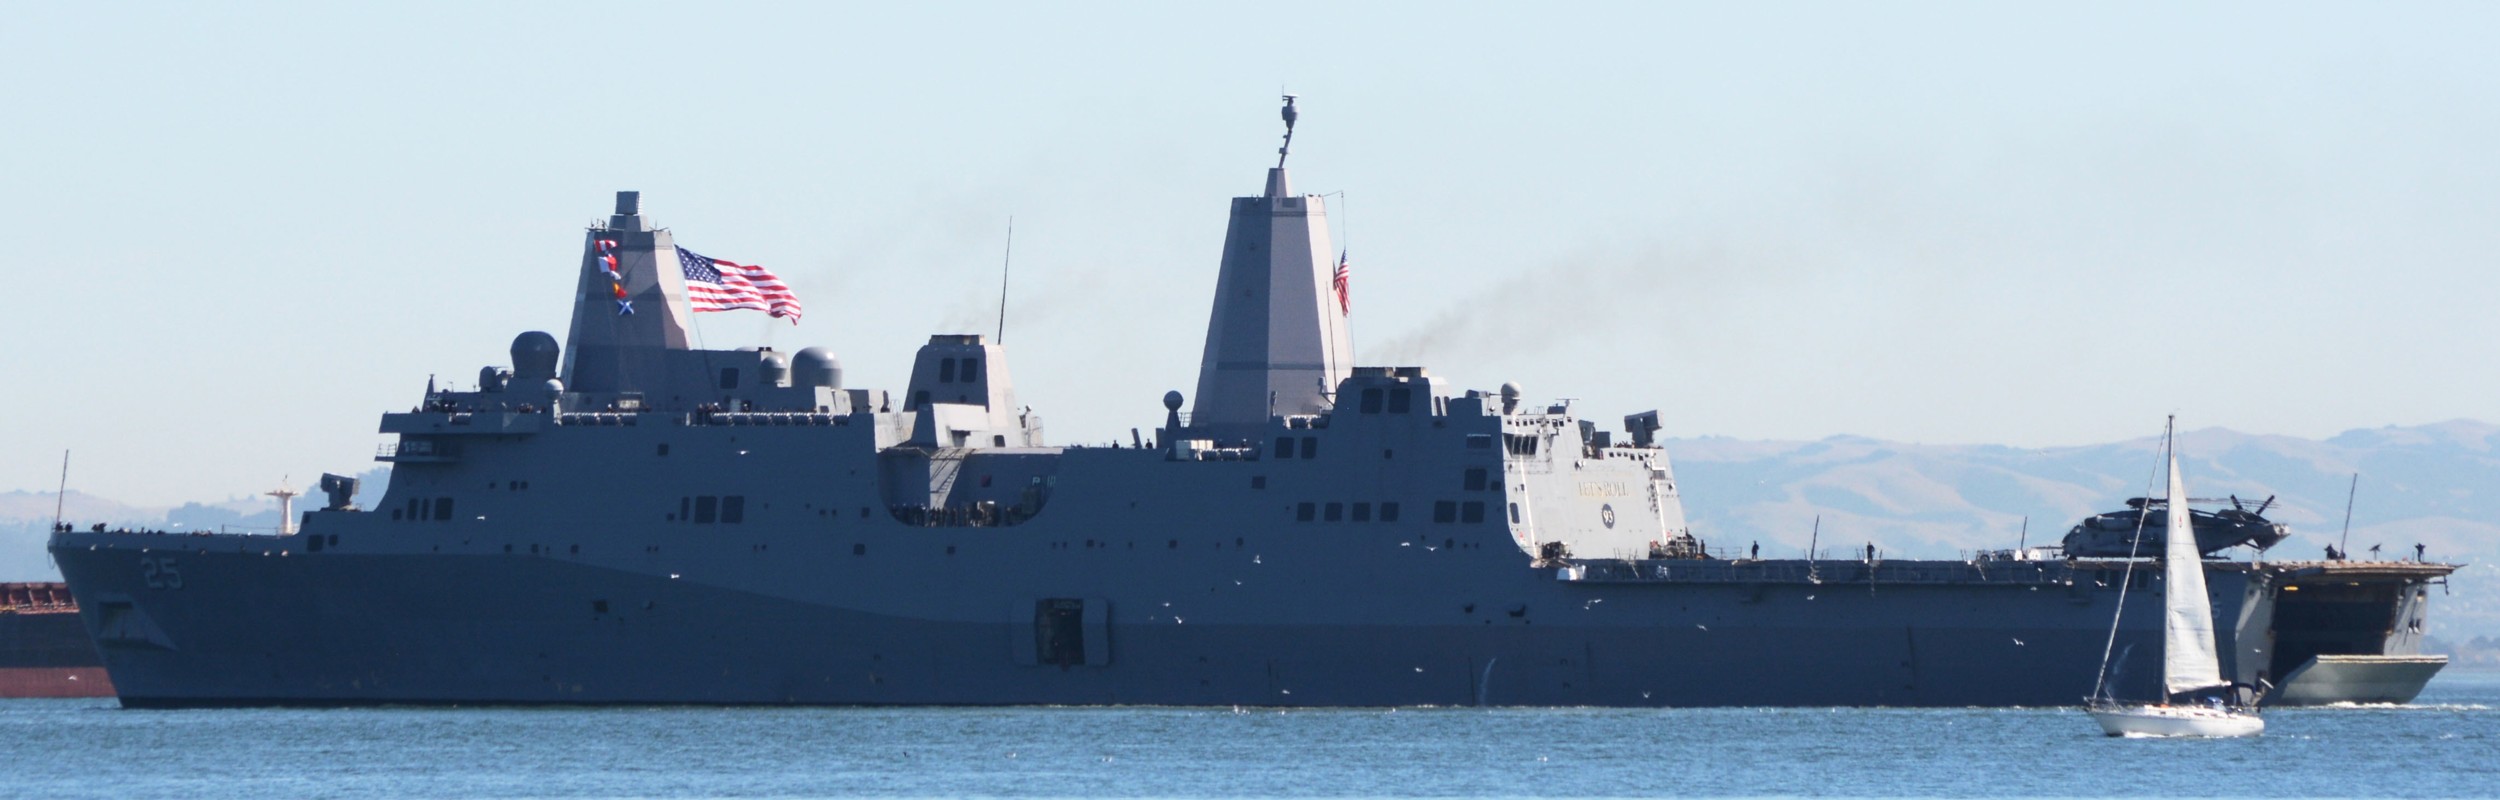 lpd-25 uss somerset san antonio class amphibious transport dock landing ship us navy san francisco fleet week 2019 68